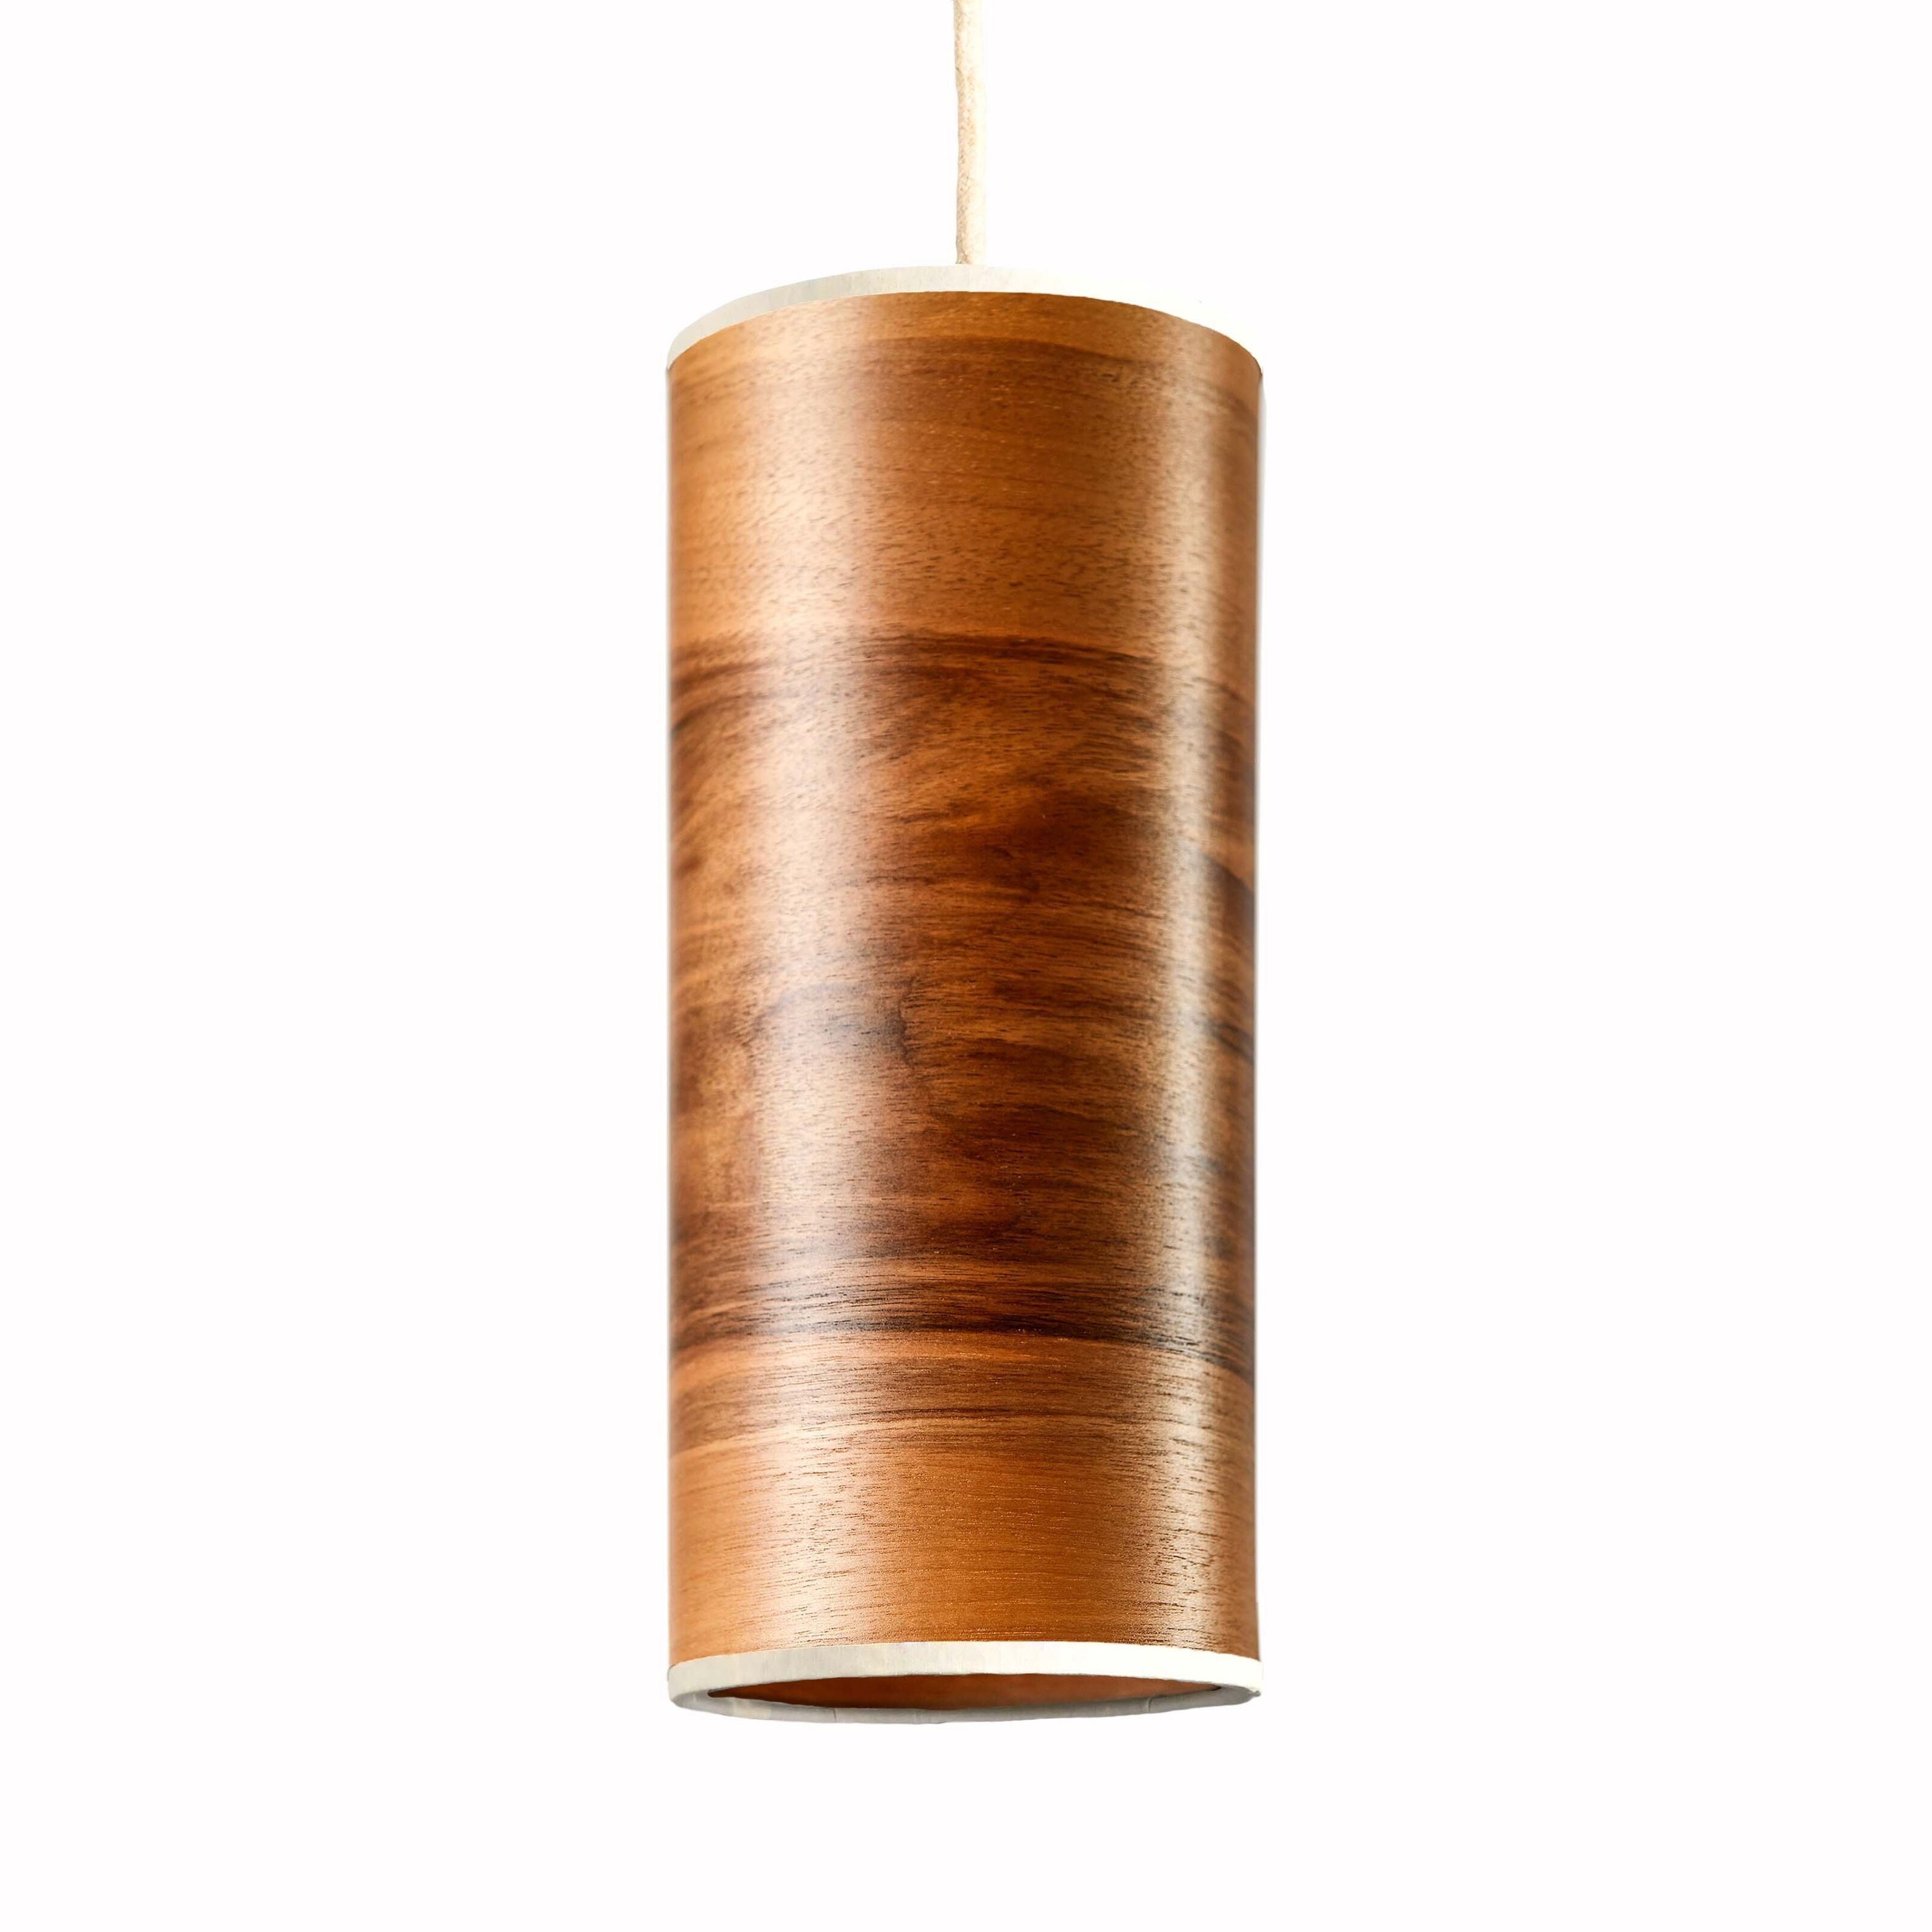 Shade light made European of veneer wholesale Walnut | - Nux white Buy - wood pendant